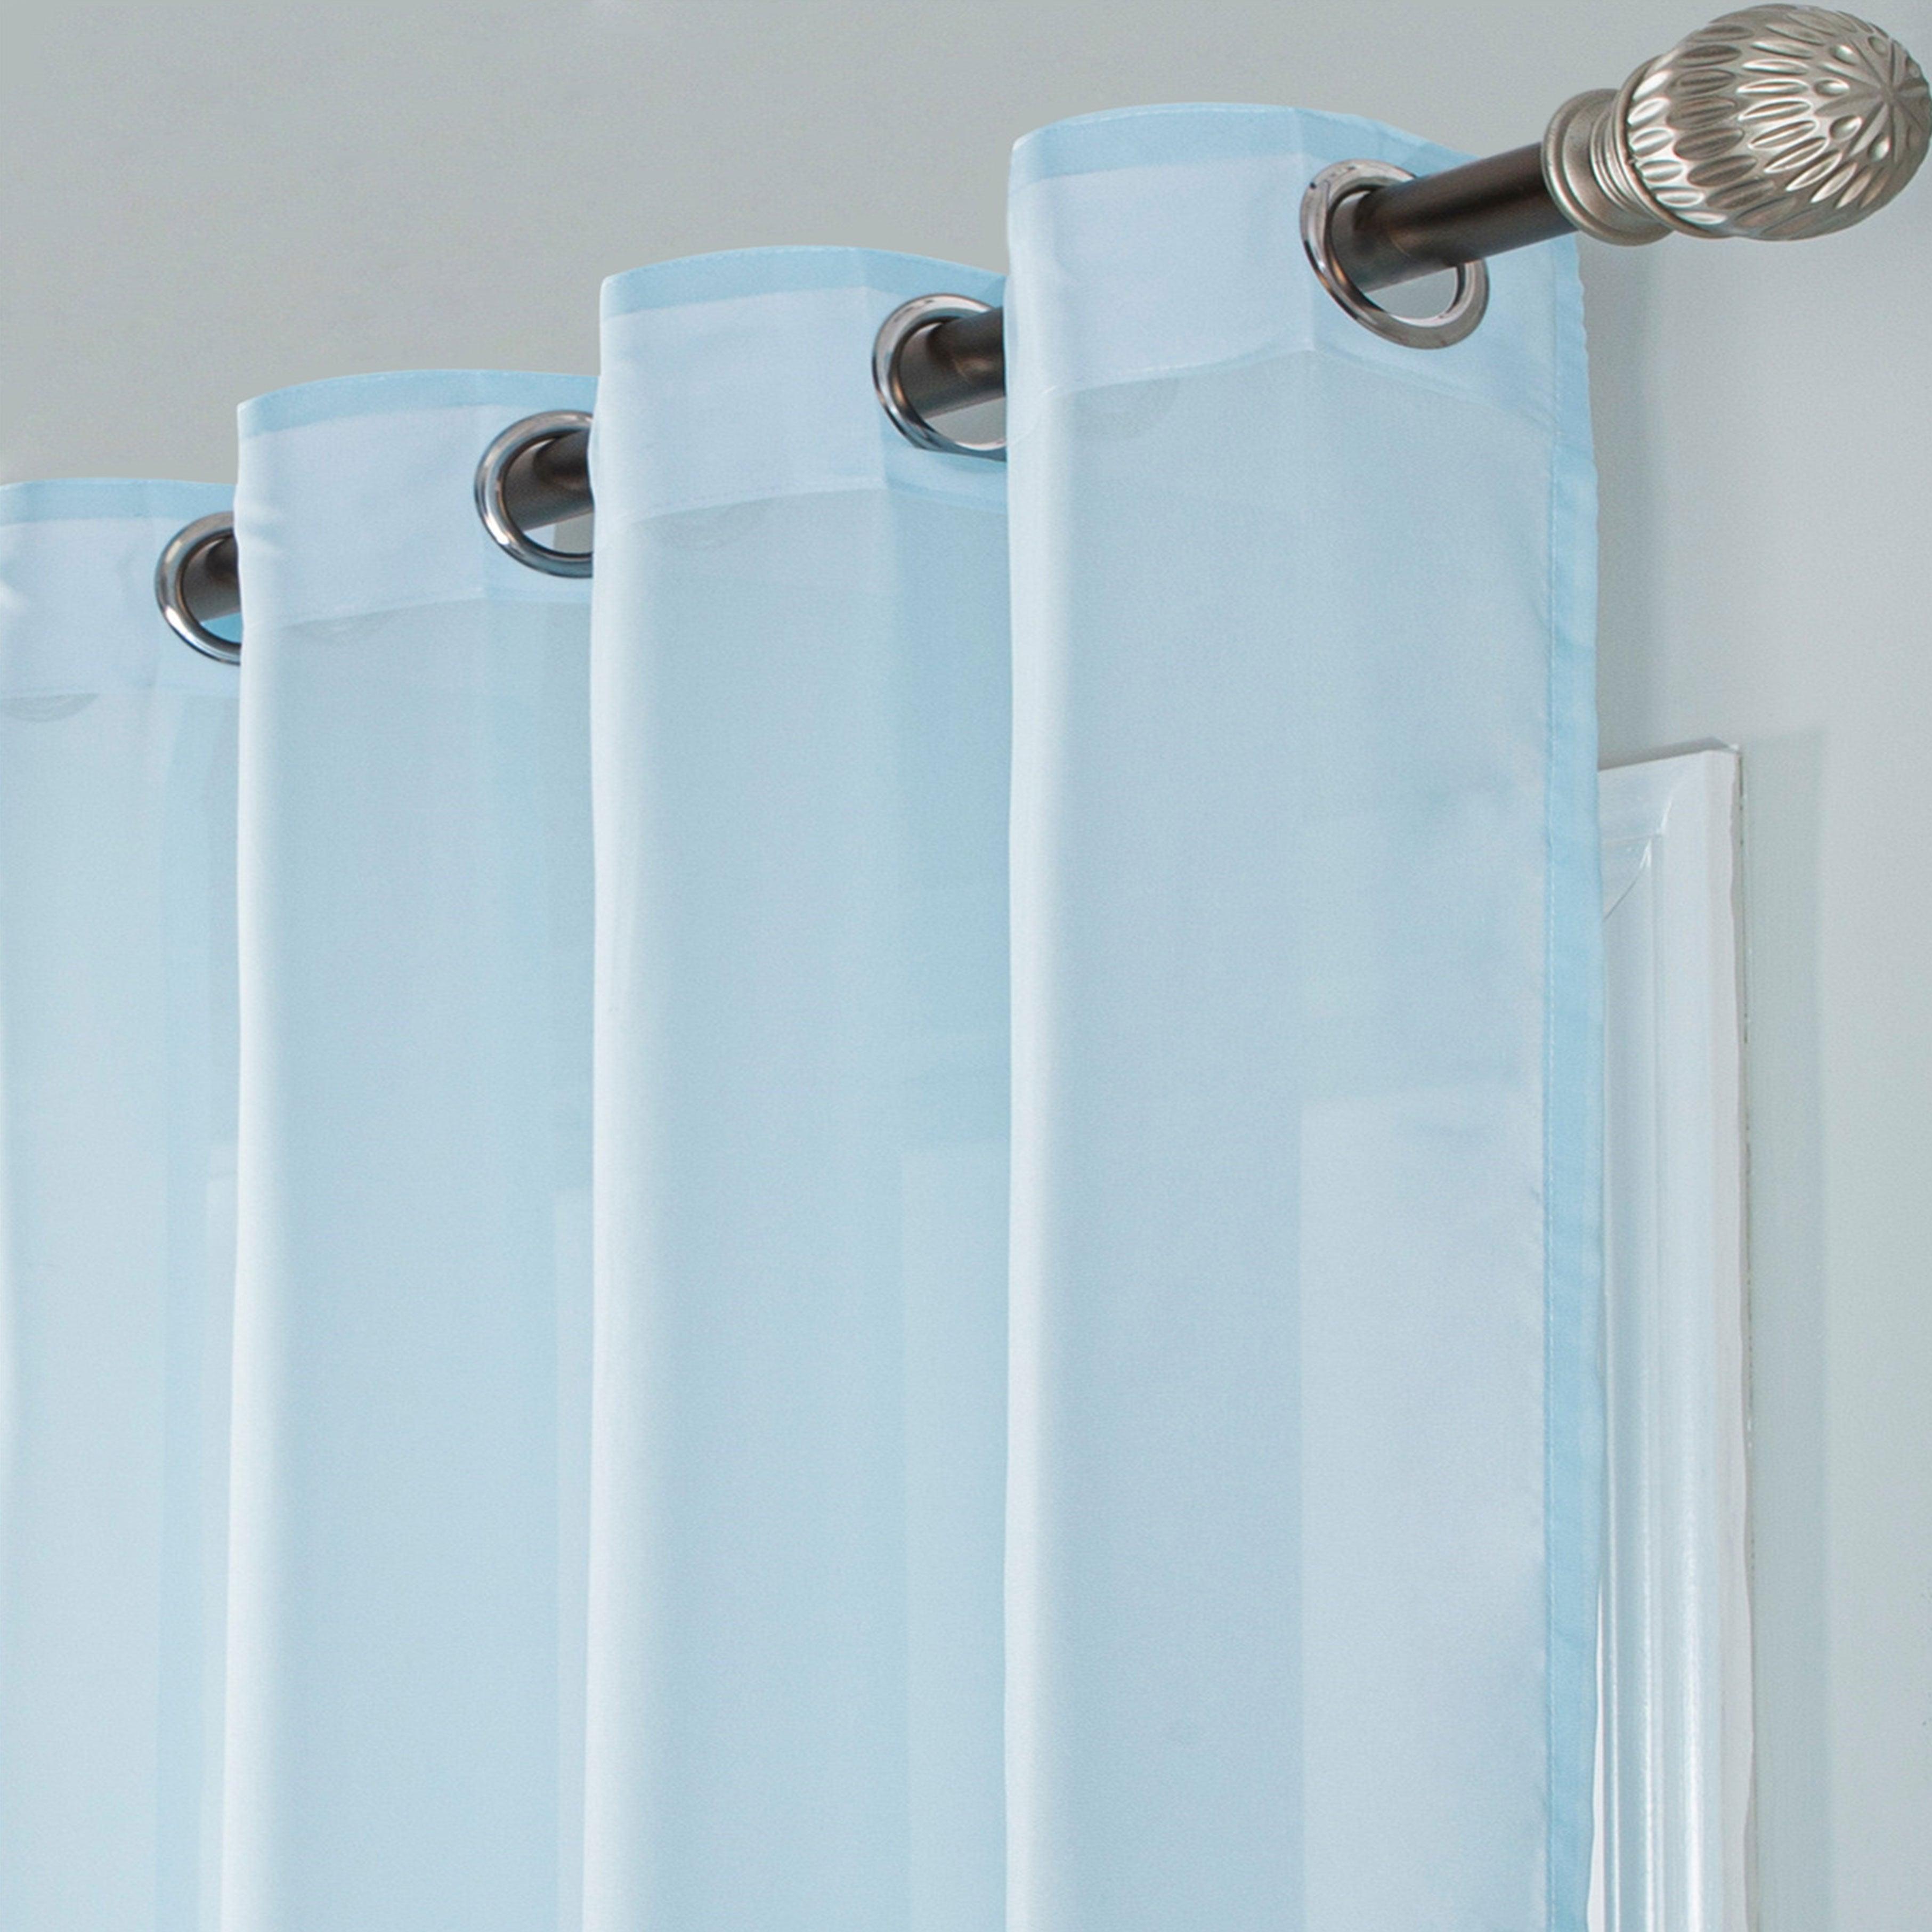 White Curtain Design -Chiffon White Sheer Kitchen Curtains Grommet Window Drapes,1 Panel - Topfinel